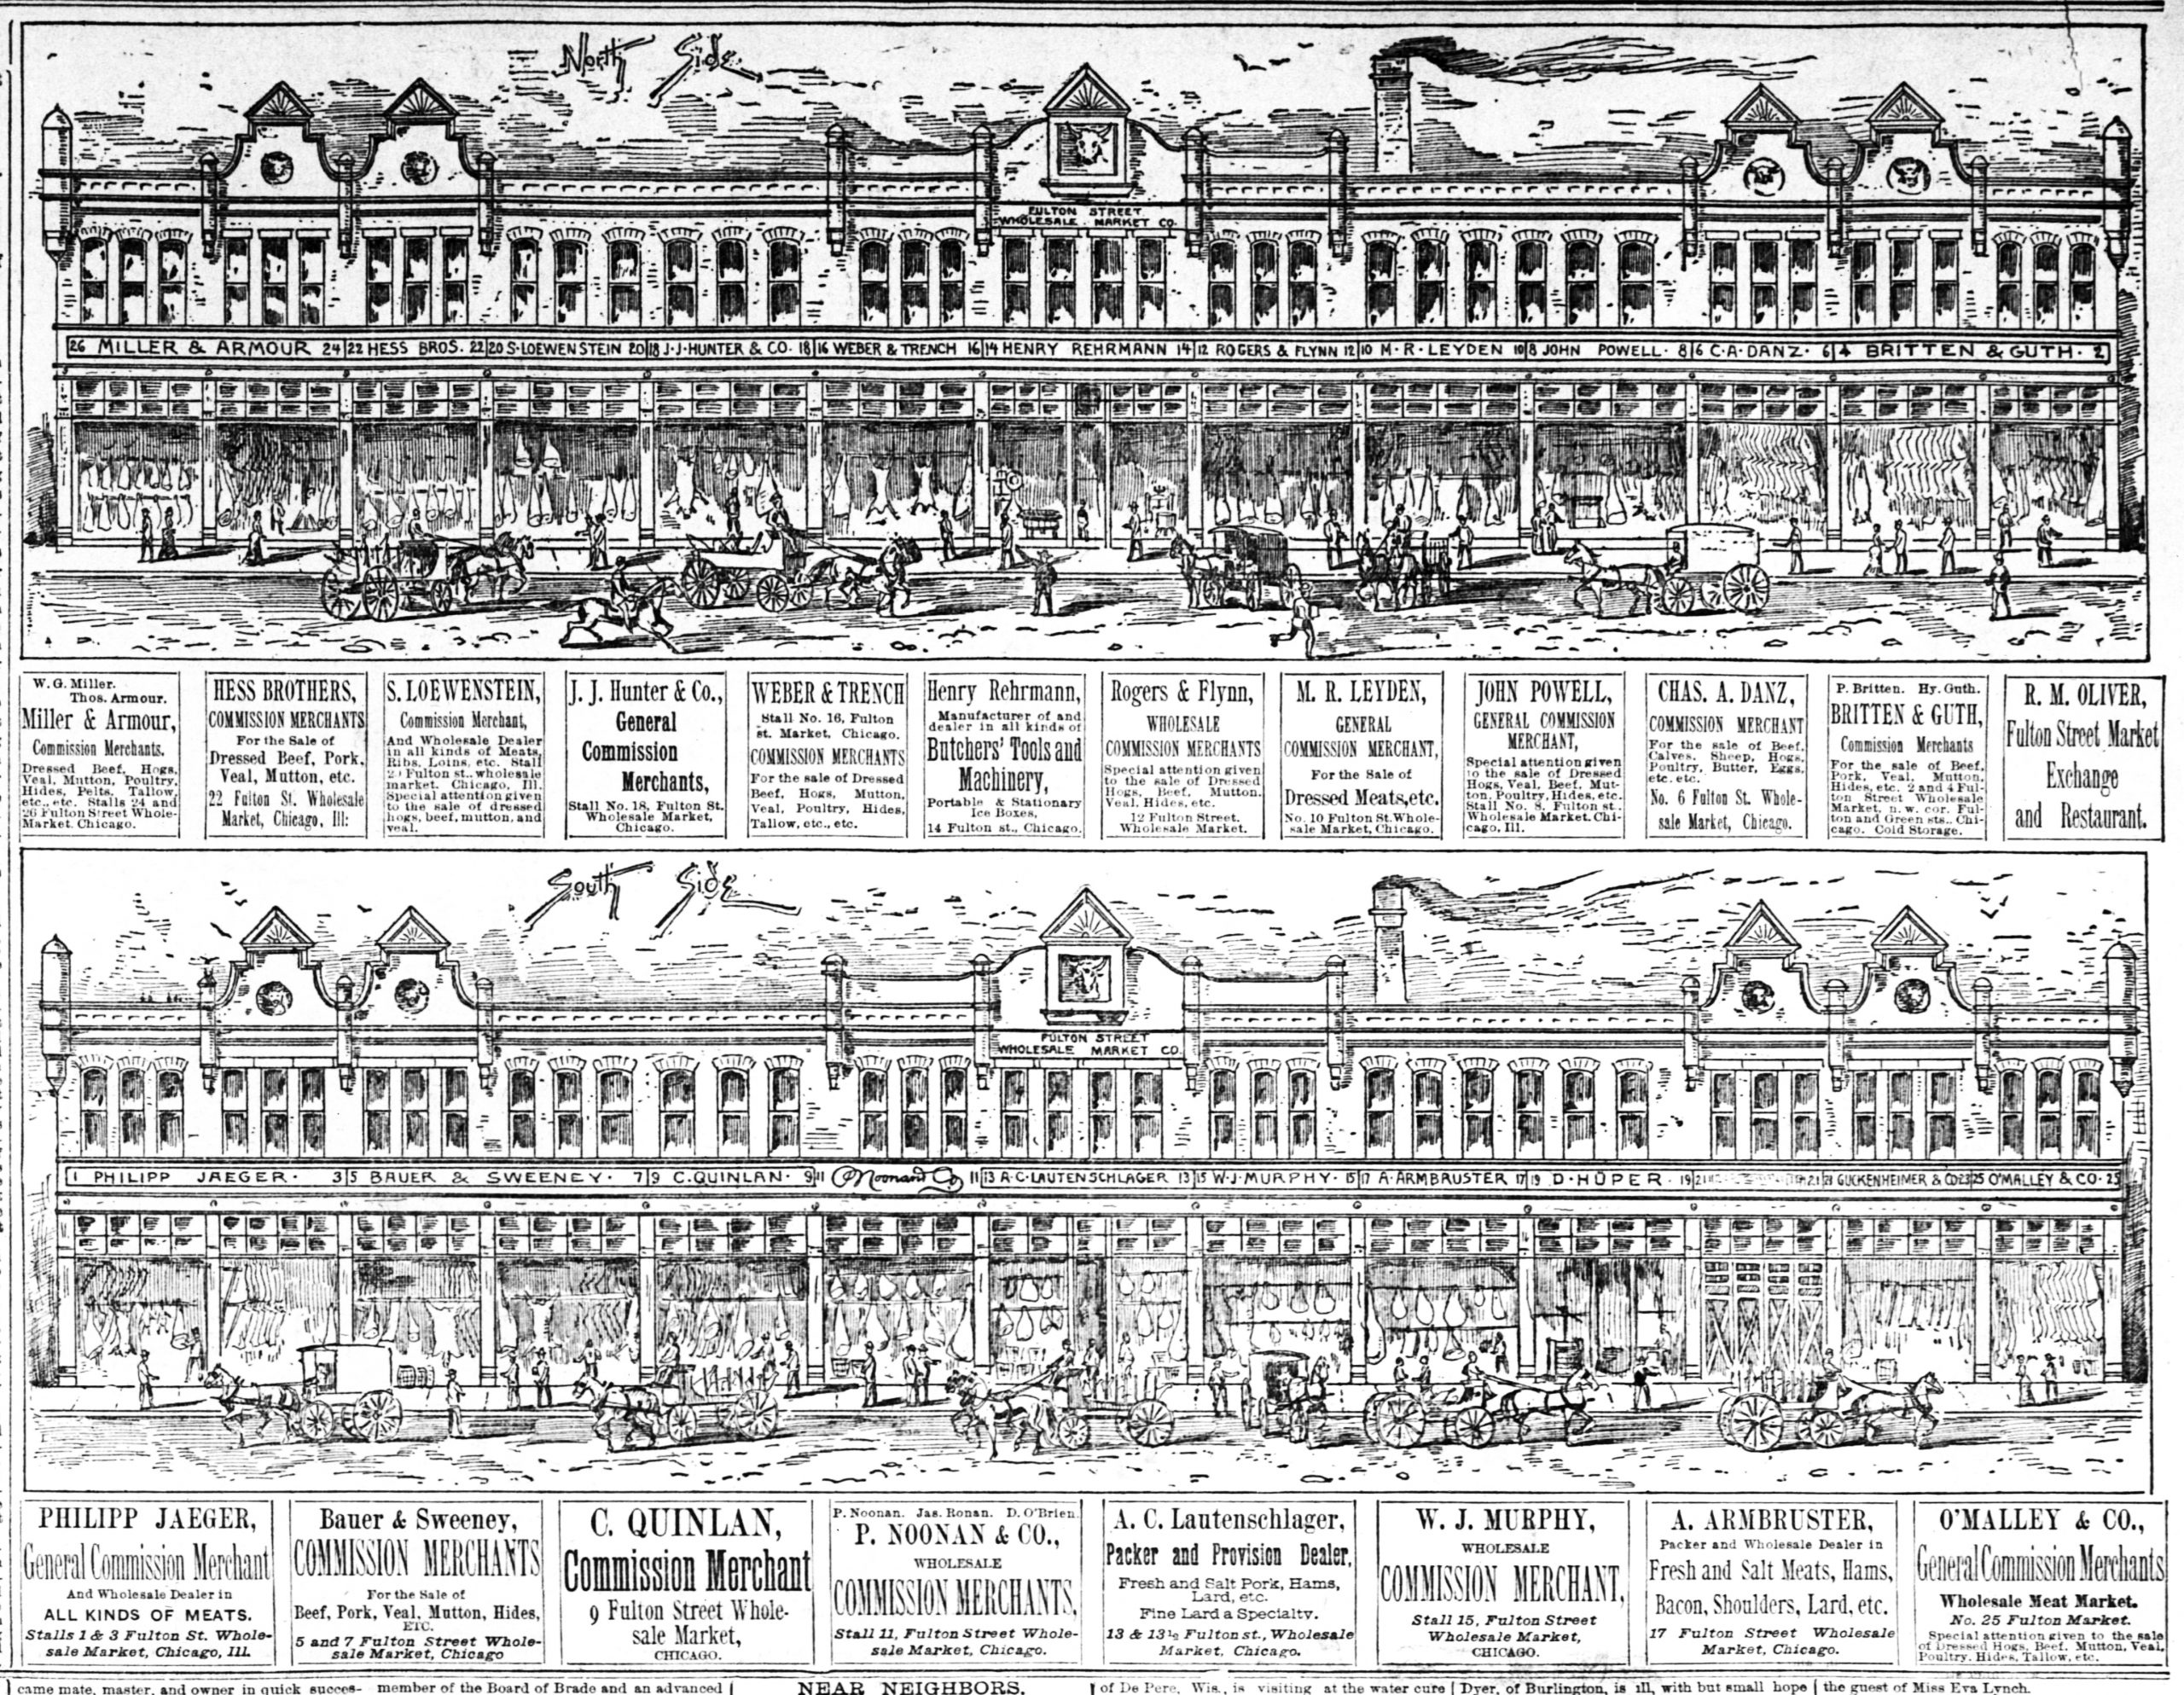 Fulton Market wholesale building 1887 Chicago Inter-Ocean